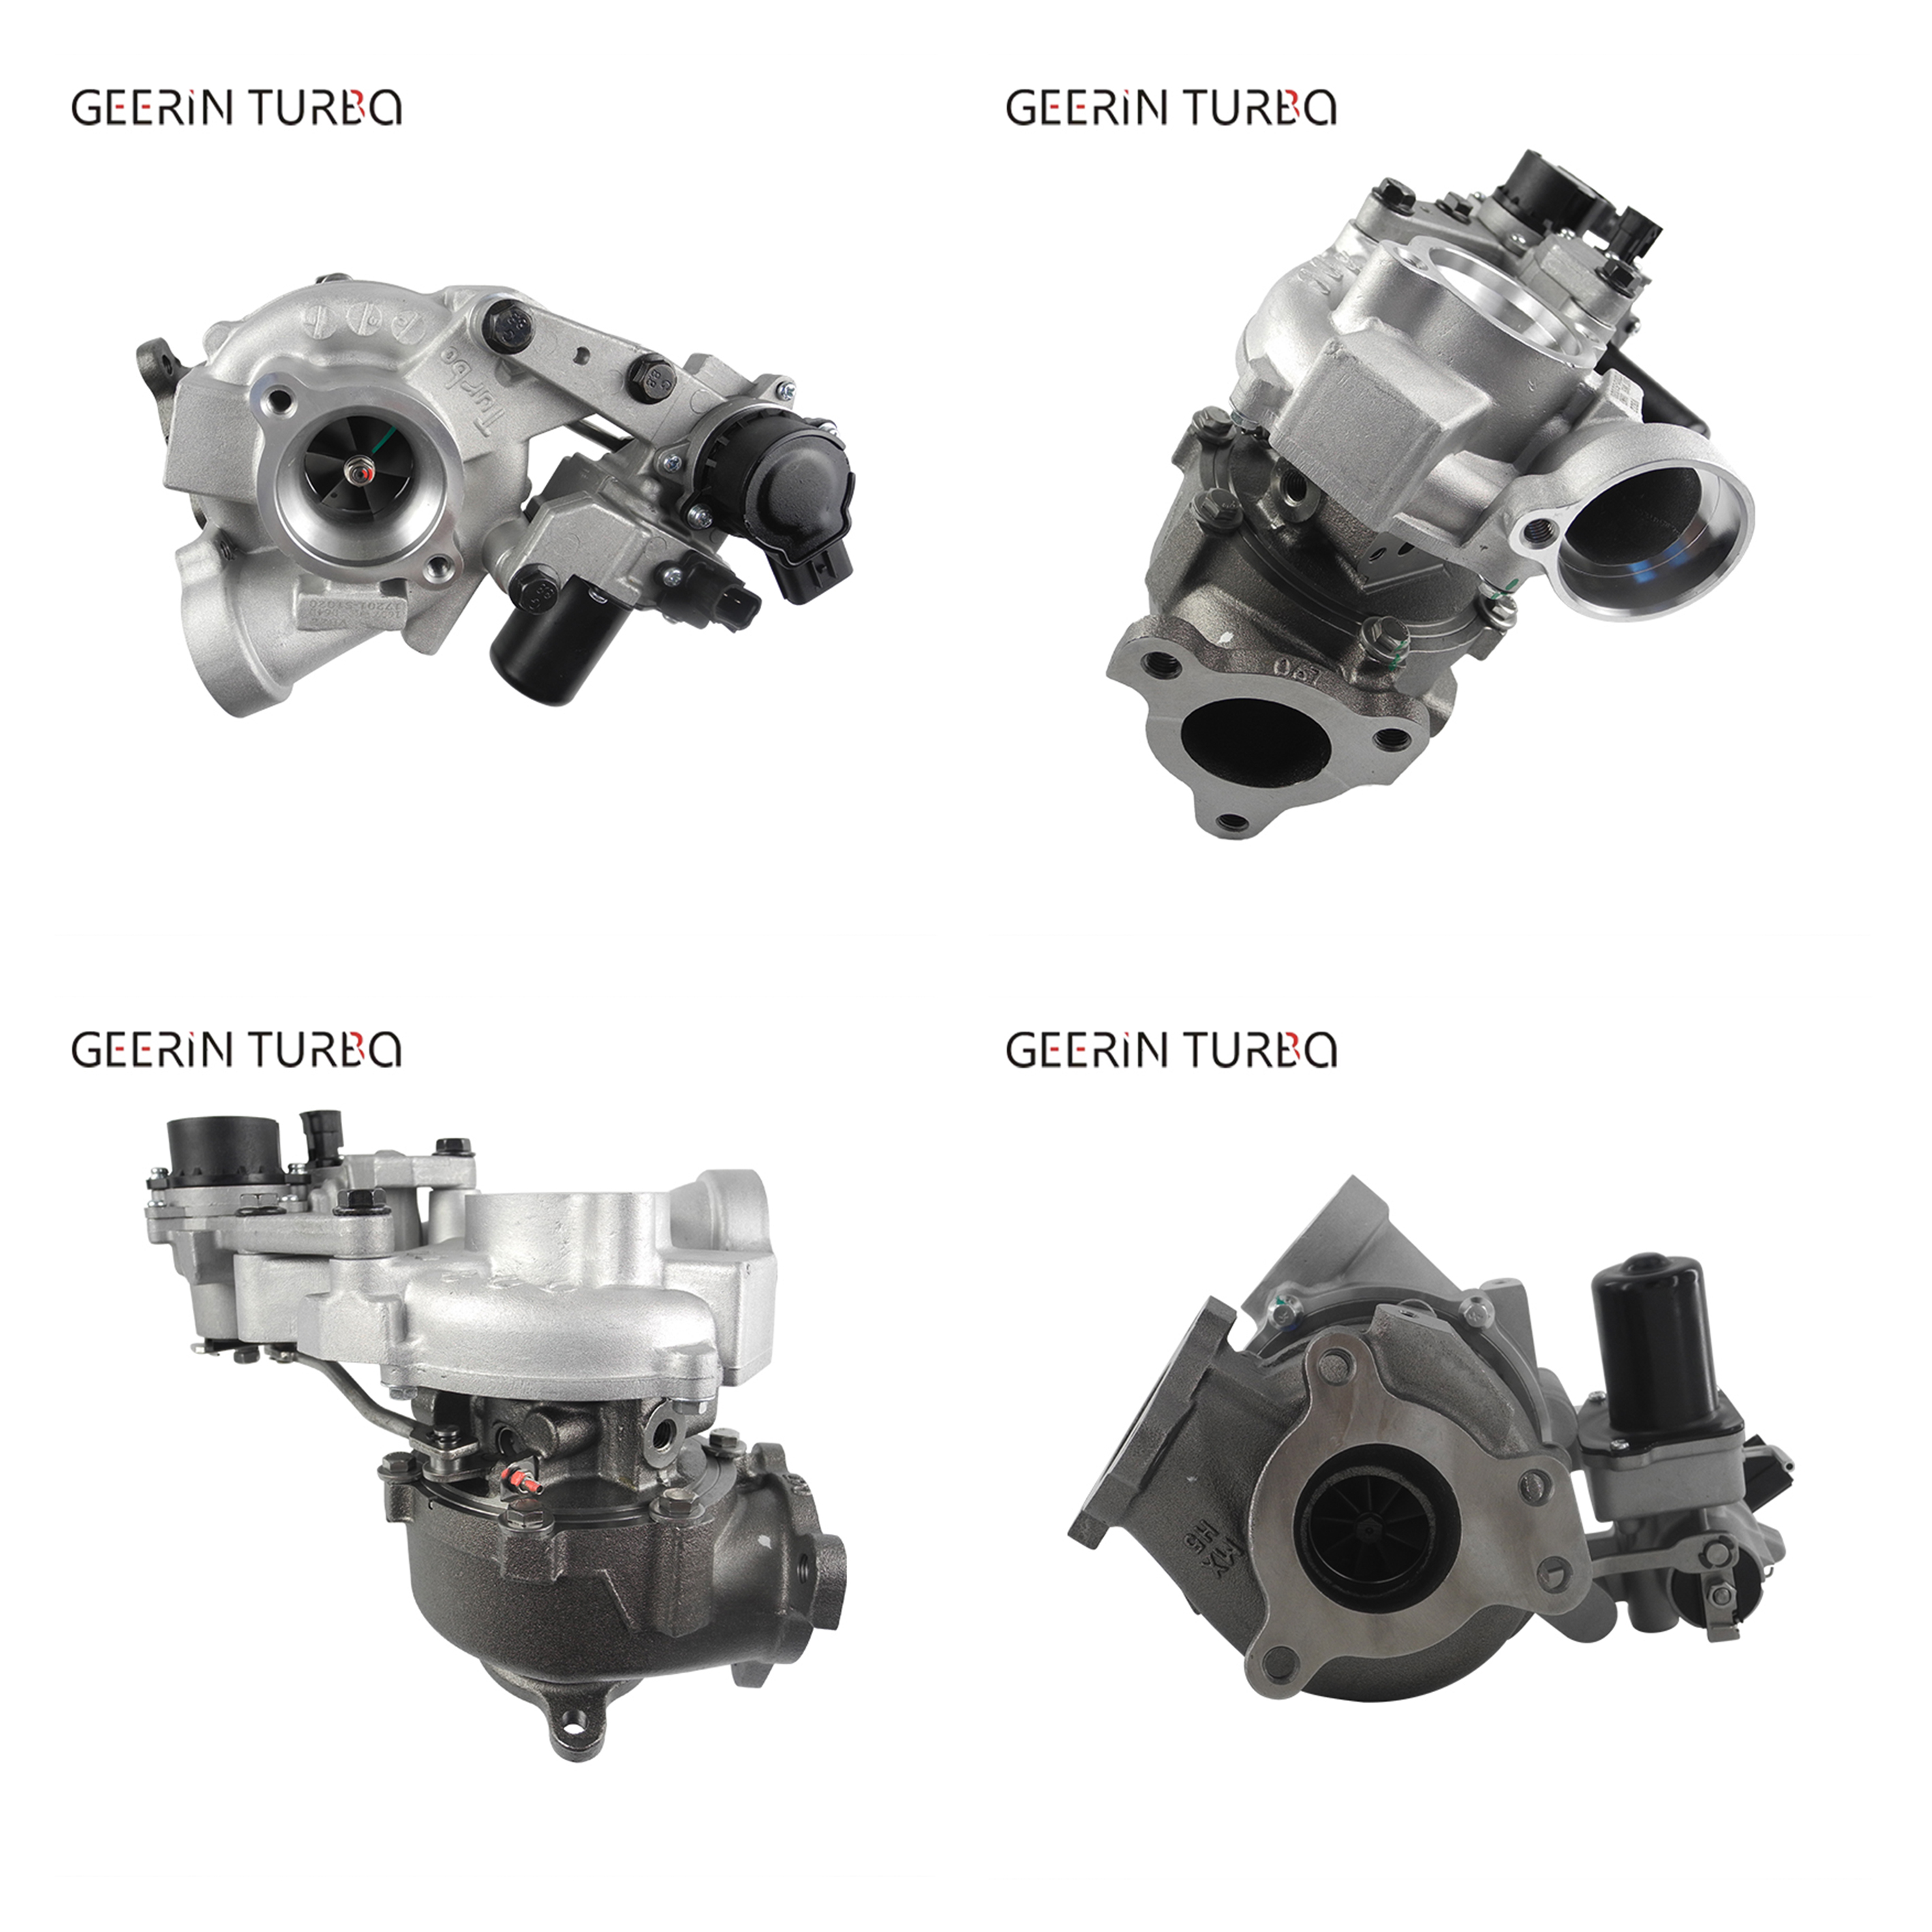 Comprar Turbos completos de la turbina de RHV4 VB36 VB22 para Toyota Landcruiser V8, Turbos completos de la turbina de RHV4 VB36 VB22 para Toyota Landcruiser V8 Precios, Turbos completos de la turbina de RHV4 VB36 VB22 para Toyota Landcruiser V8 Marcas, Turbos completos de la turbina de RHV4 VB36 VB22 para Toyota Landcruiser V8 Fabricante, Turbos completos de la turbina de RHV4 VB36 VB22 para Toyota Landcruiser V8 Citas, Turbos completos de la turbina de RHV4 VB36 VB22 para Toyota Landcruiser V8 Empresa.